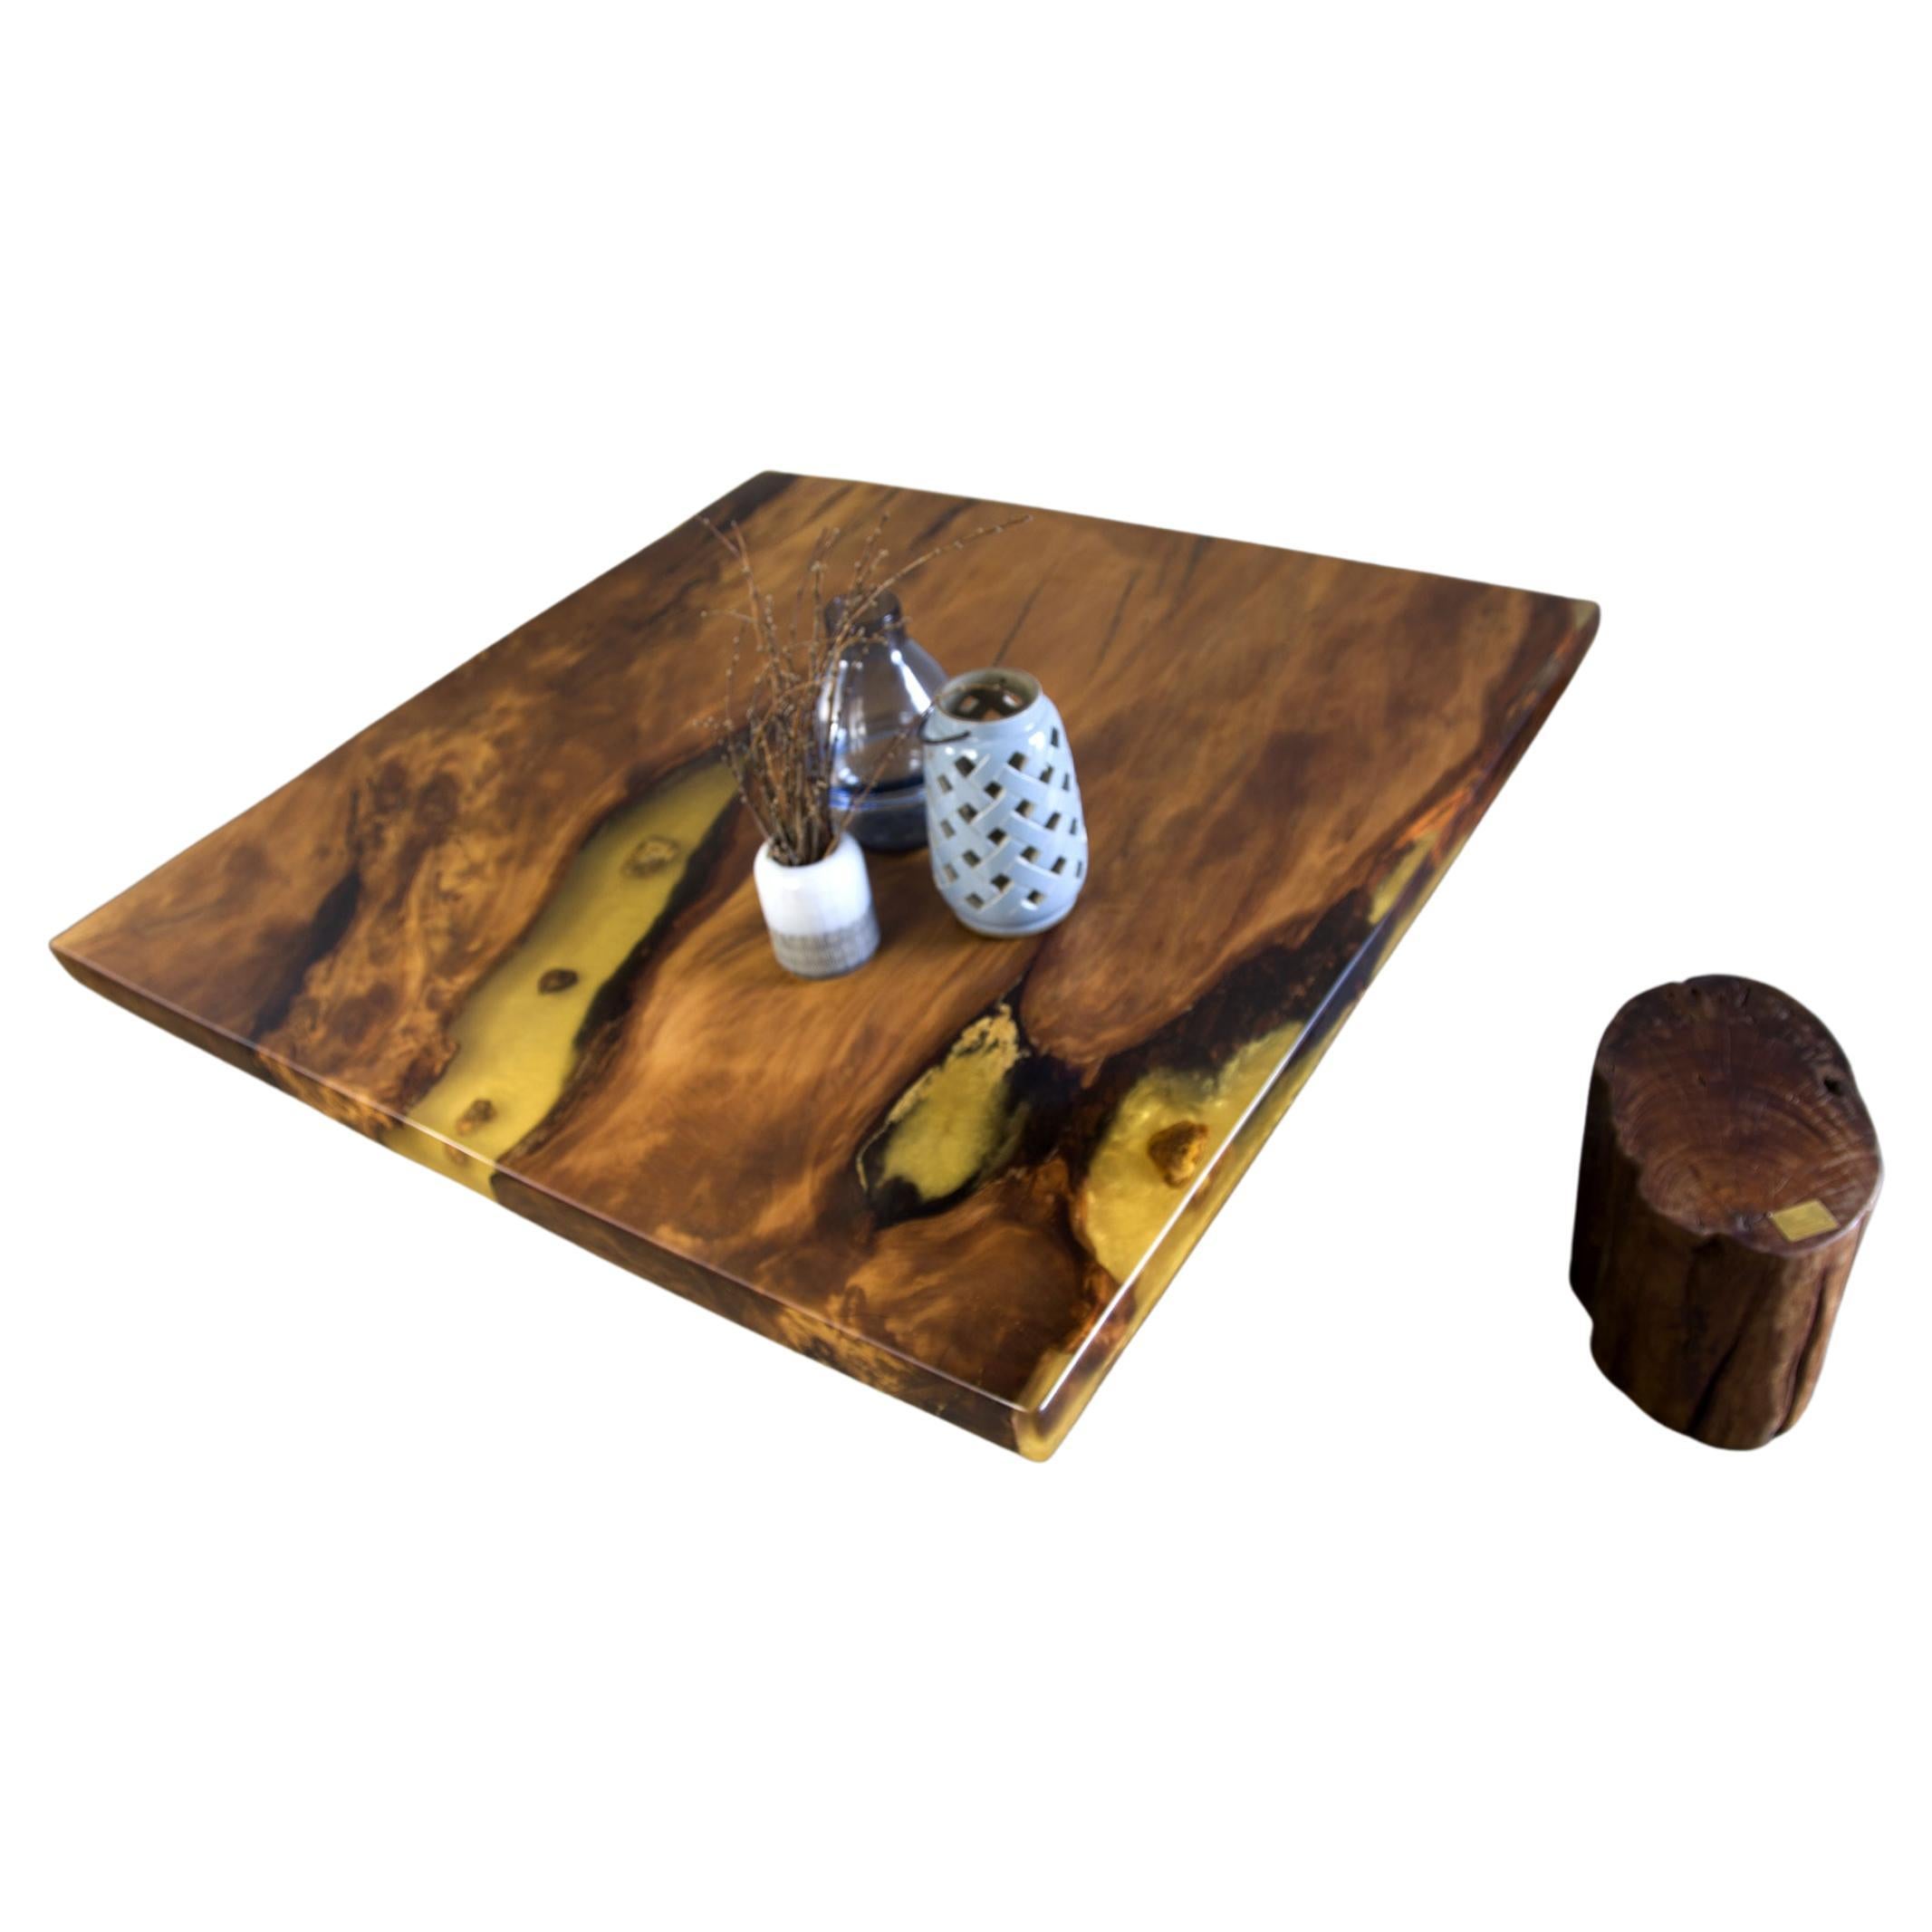 Kauri Coffee Table in Solid Ancient Kauri Wood